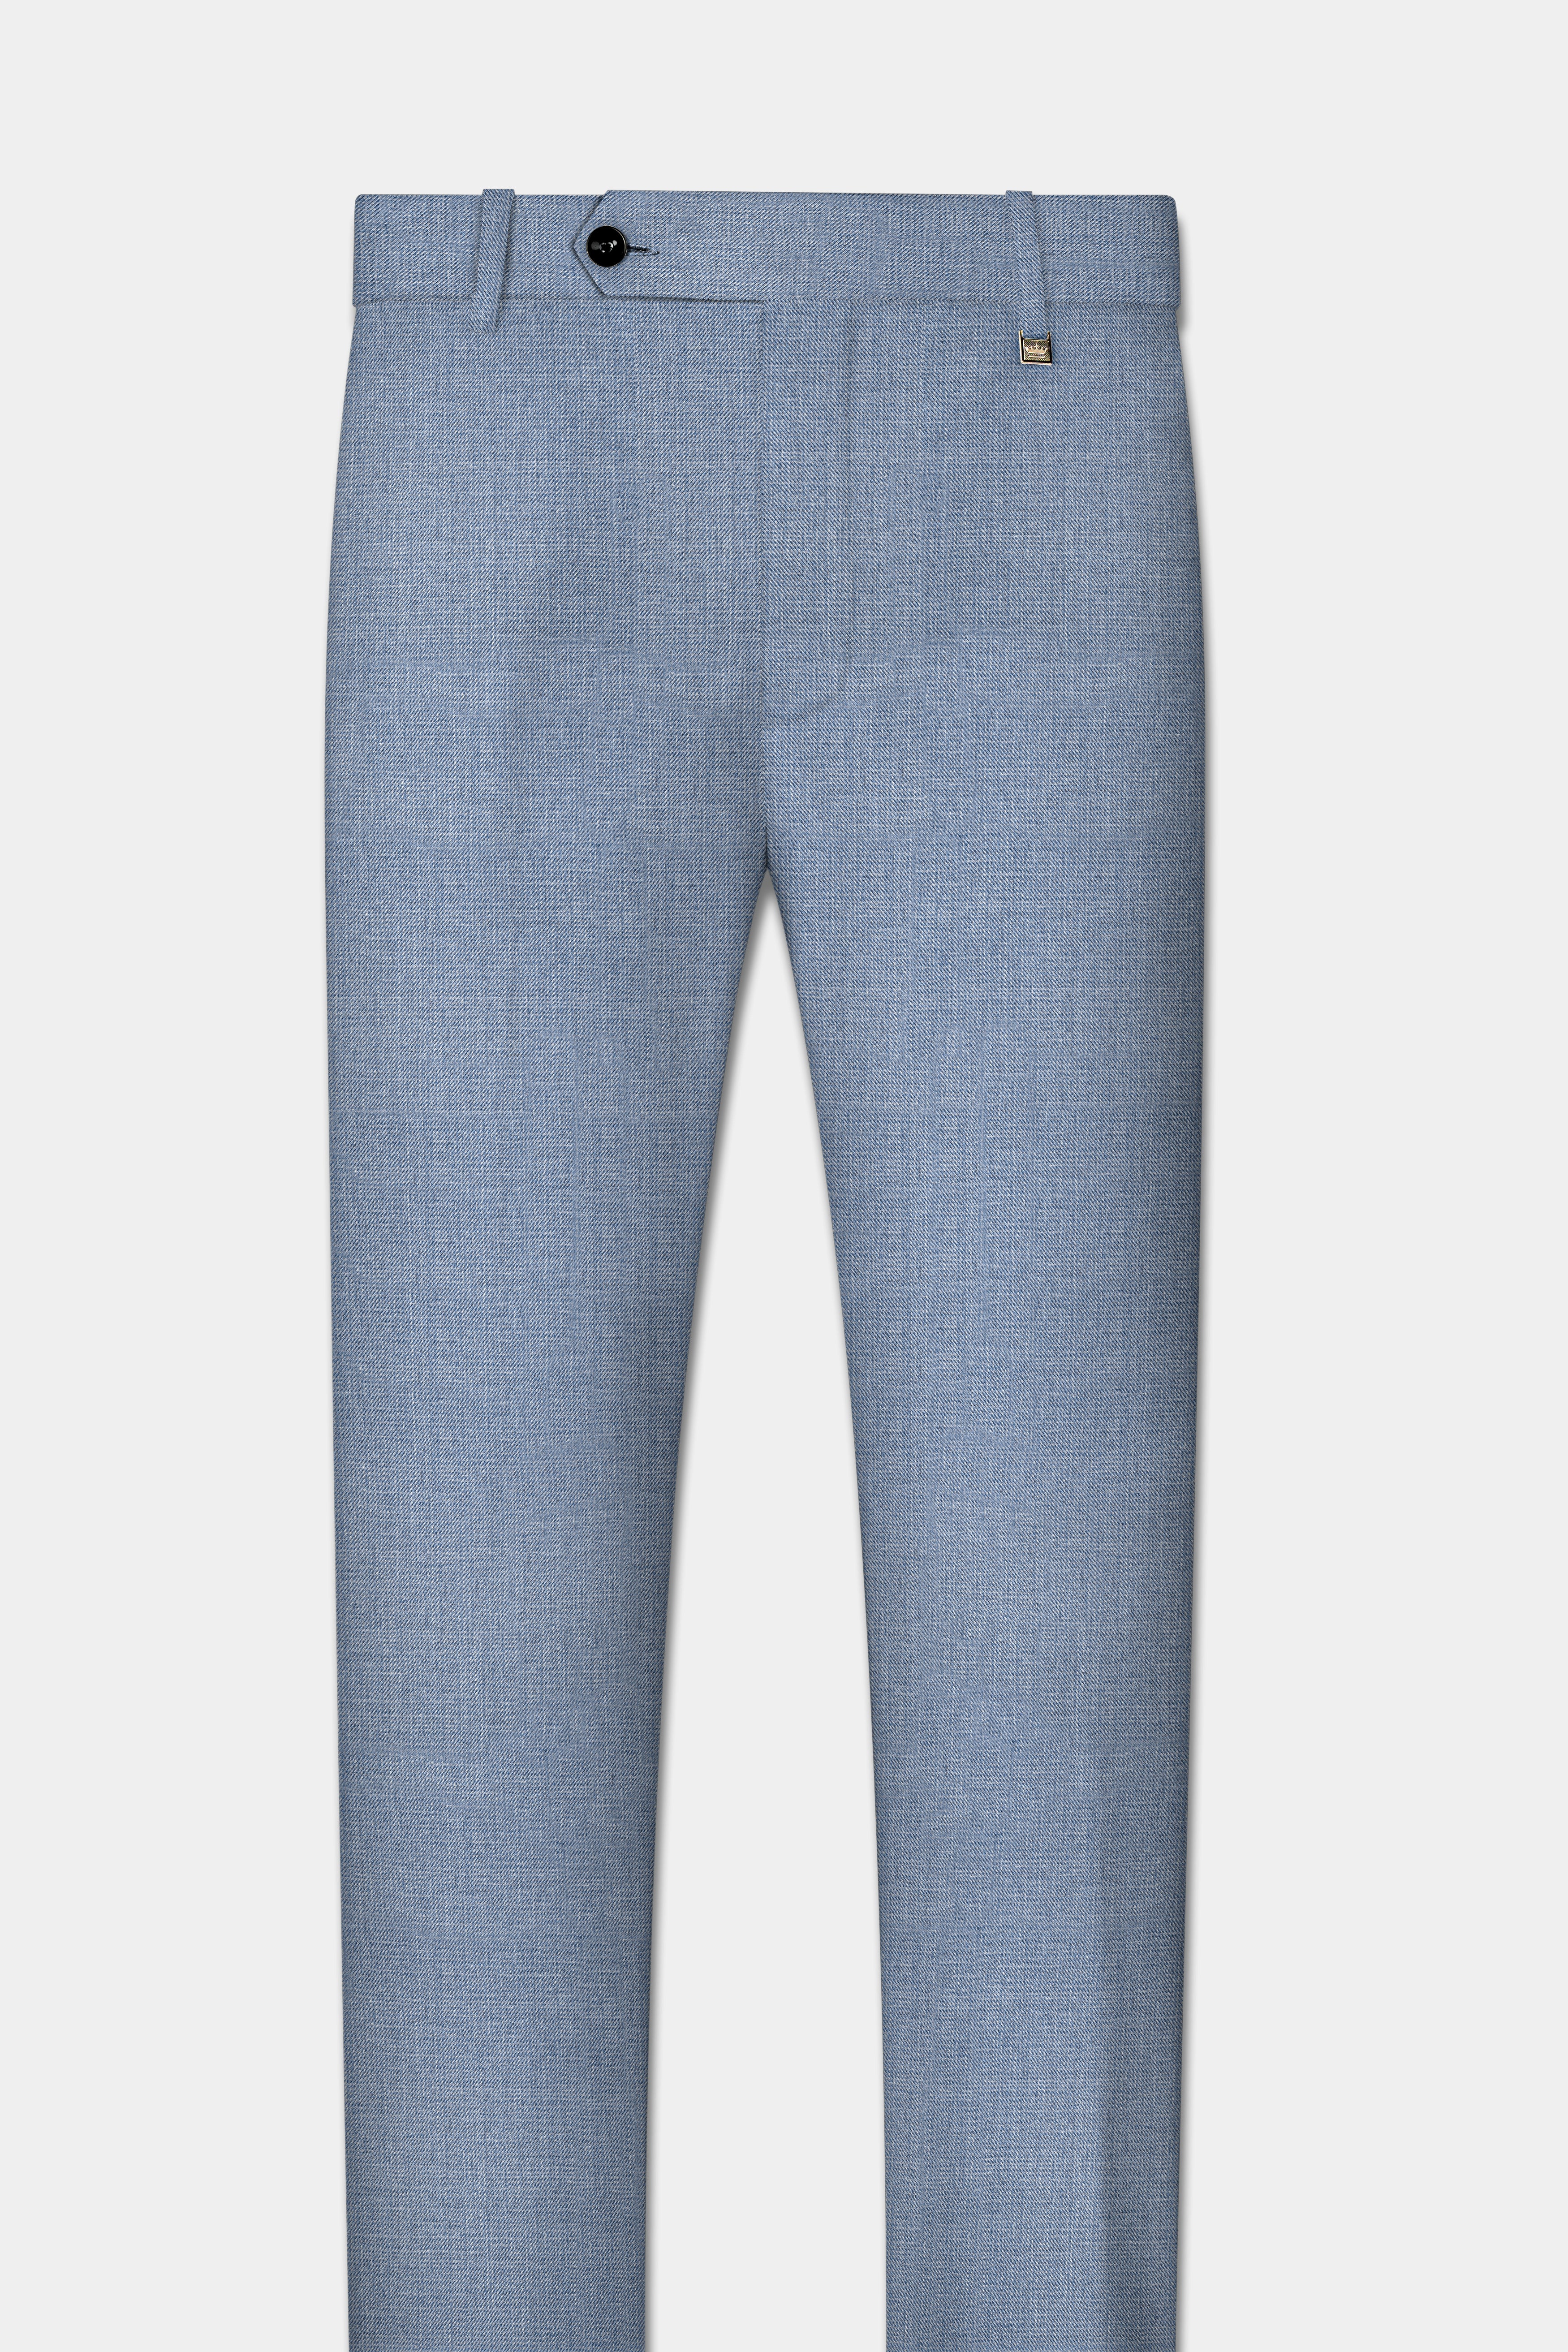 Buy Blue Grey Plaid Formal Pants For Men Online In India